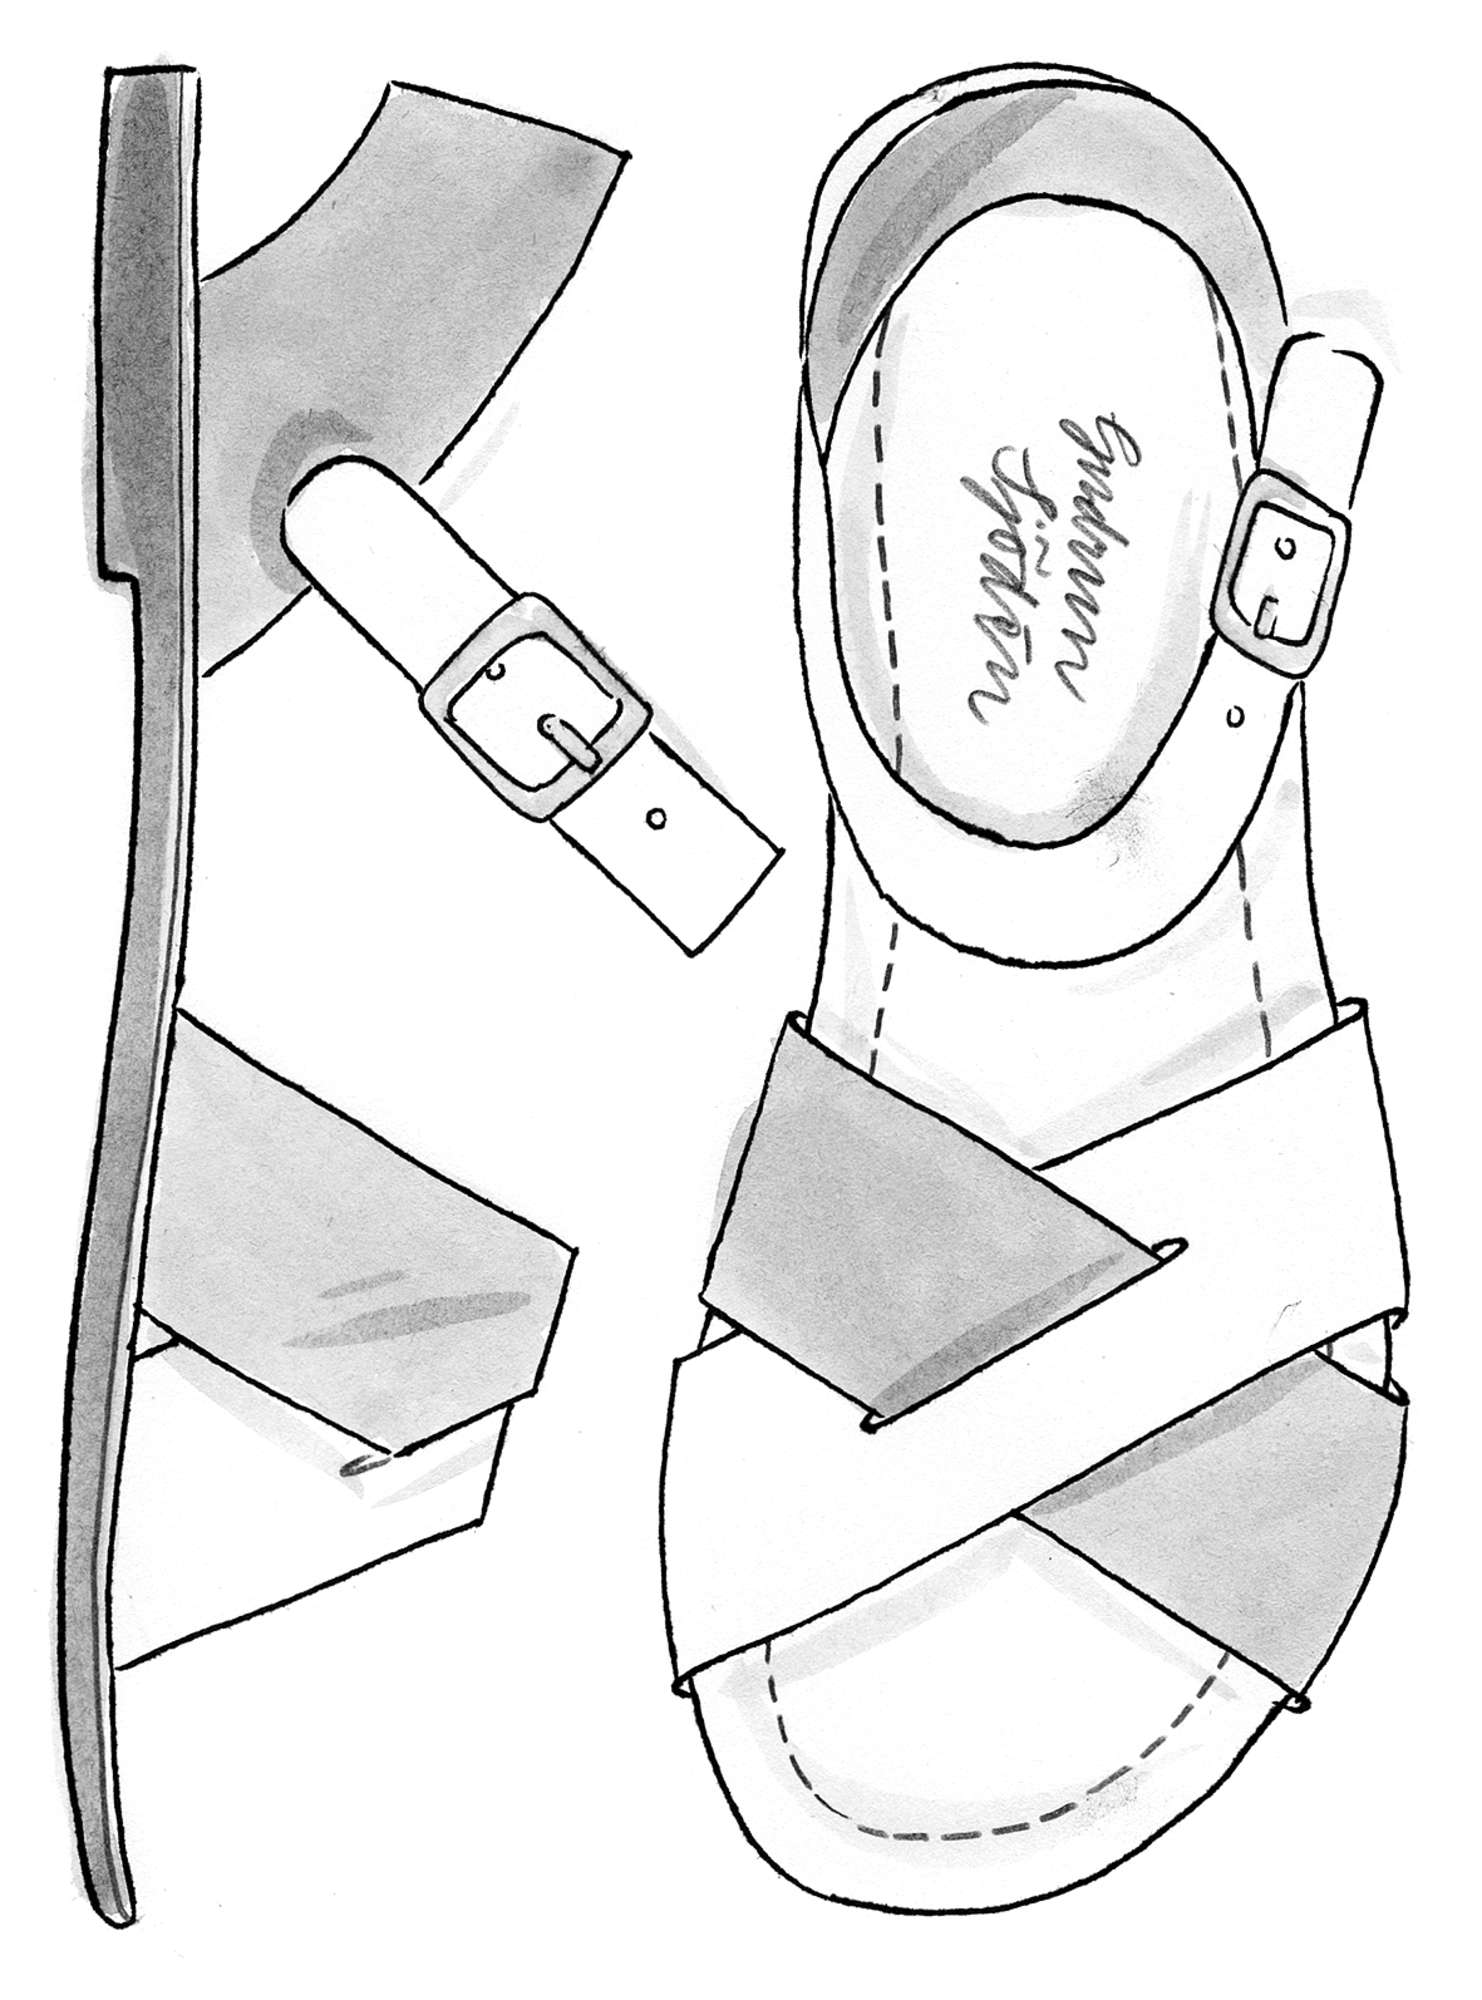 Nappa sandals